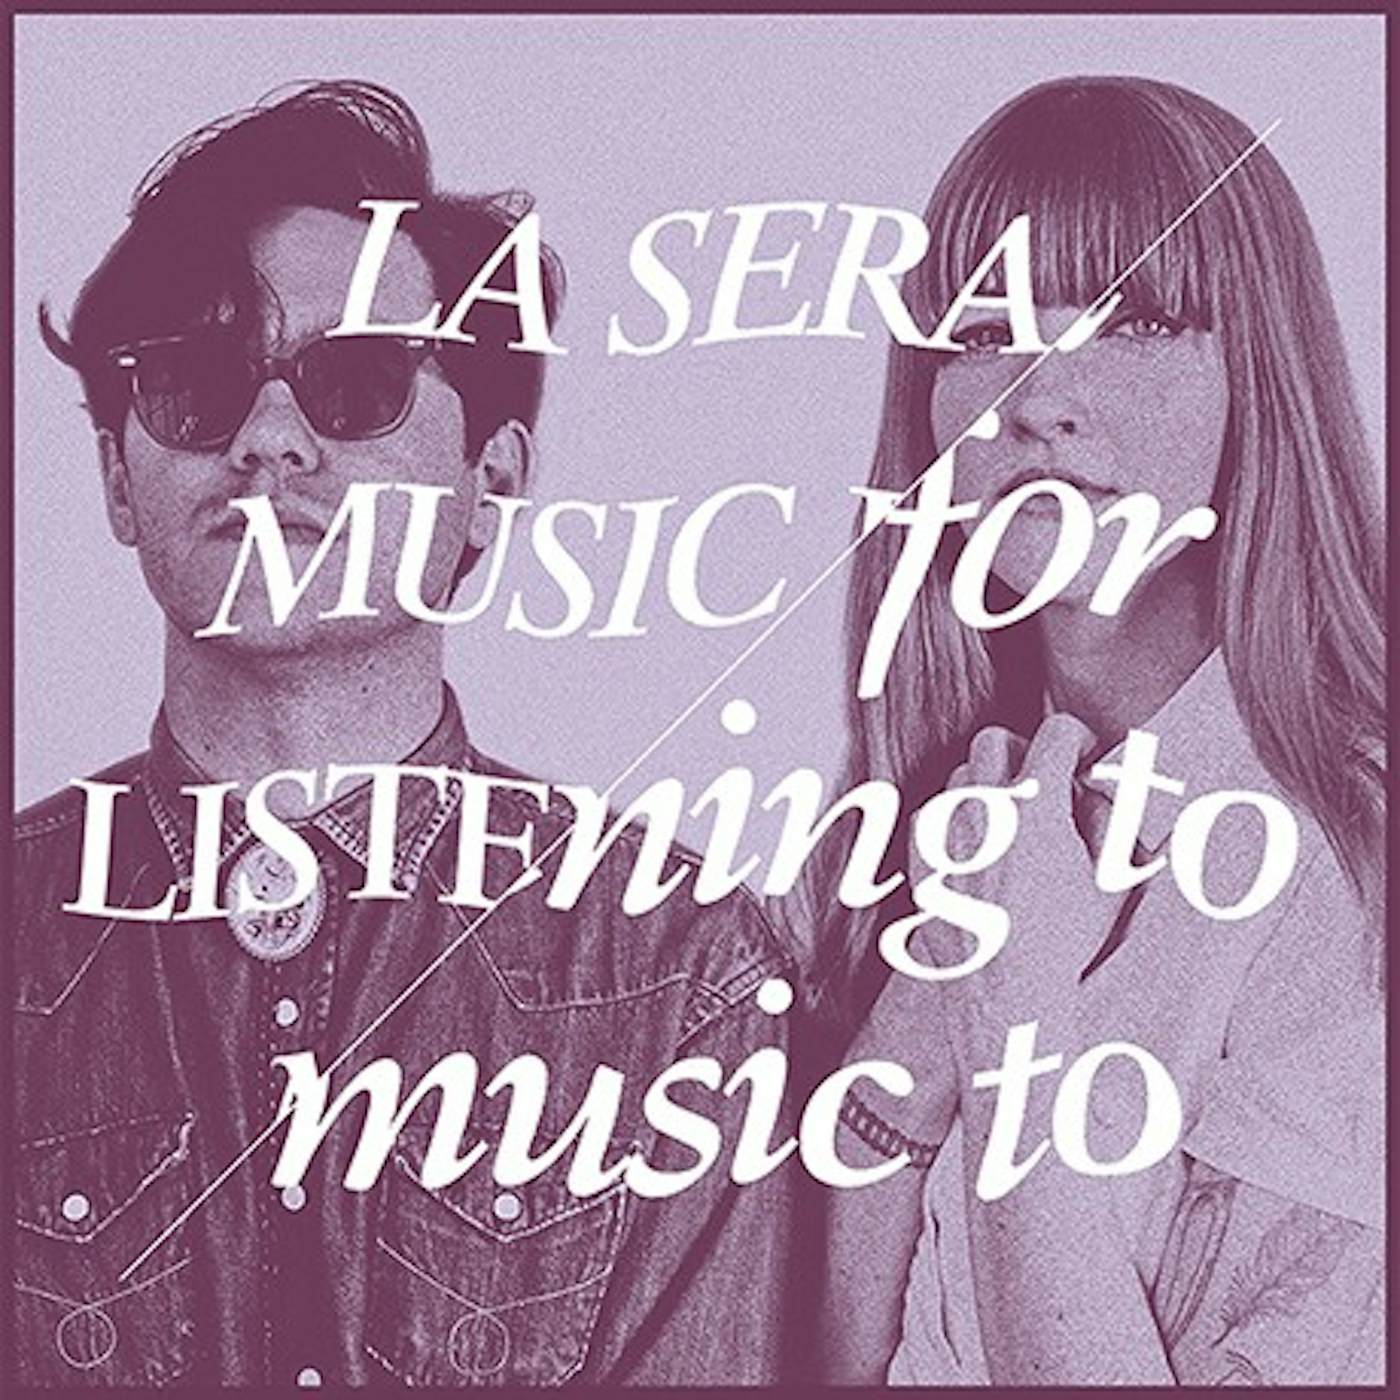 La Sera Music For Listening To Music To (Vinyl)